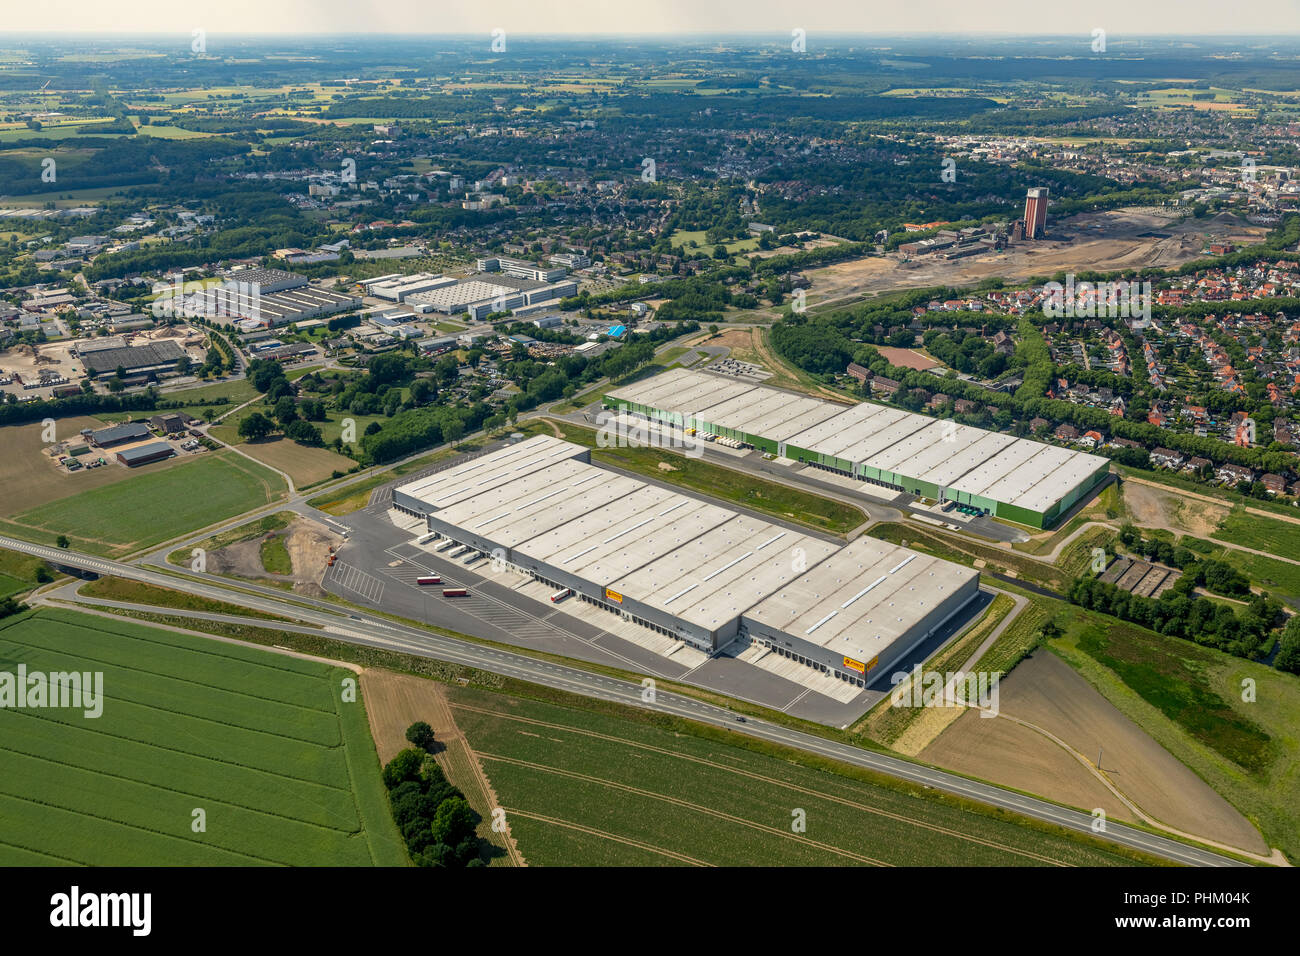 Aerial view, logistics location Logport 6 in Kamp-Lintfort, former coal storage site, belongs to Duisport - Duisburger Hafen, warehouses for truck han Stock Photo